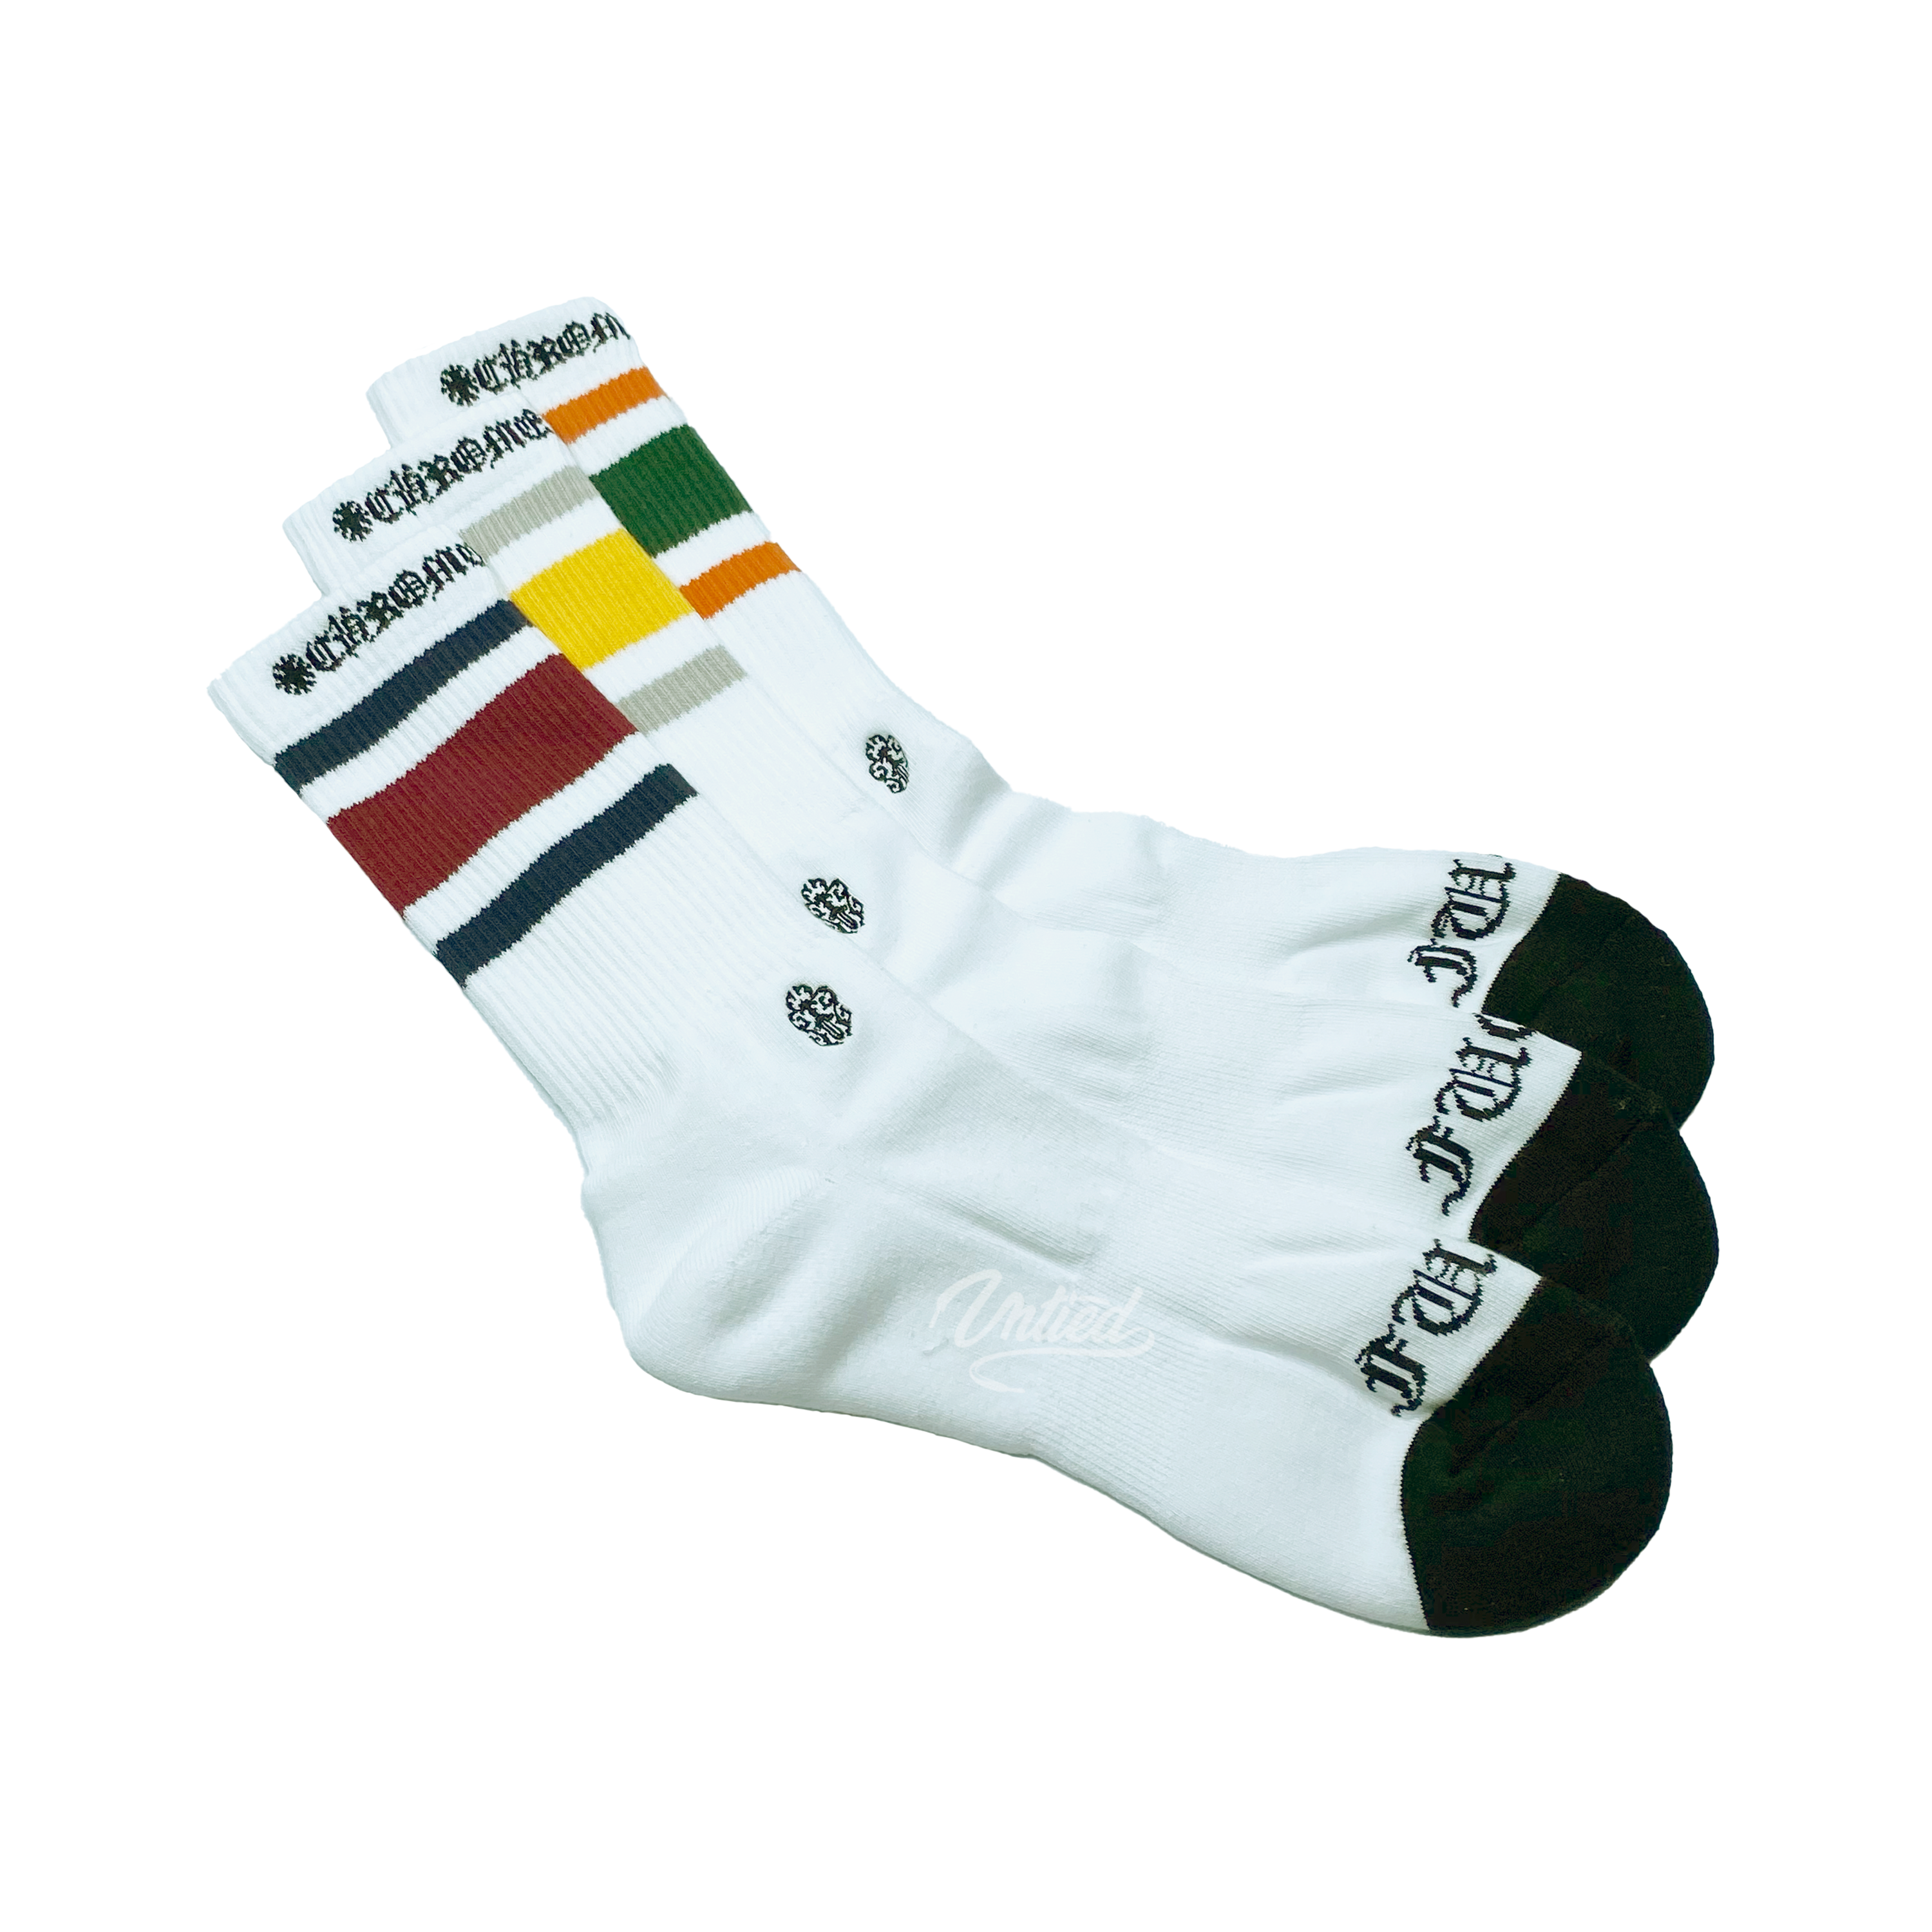 Chrome Hearts 3-Pack CH Socks Multicolor/Black - FW20 - US